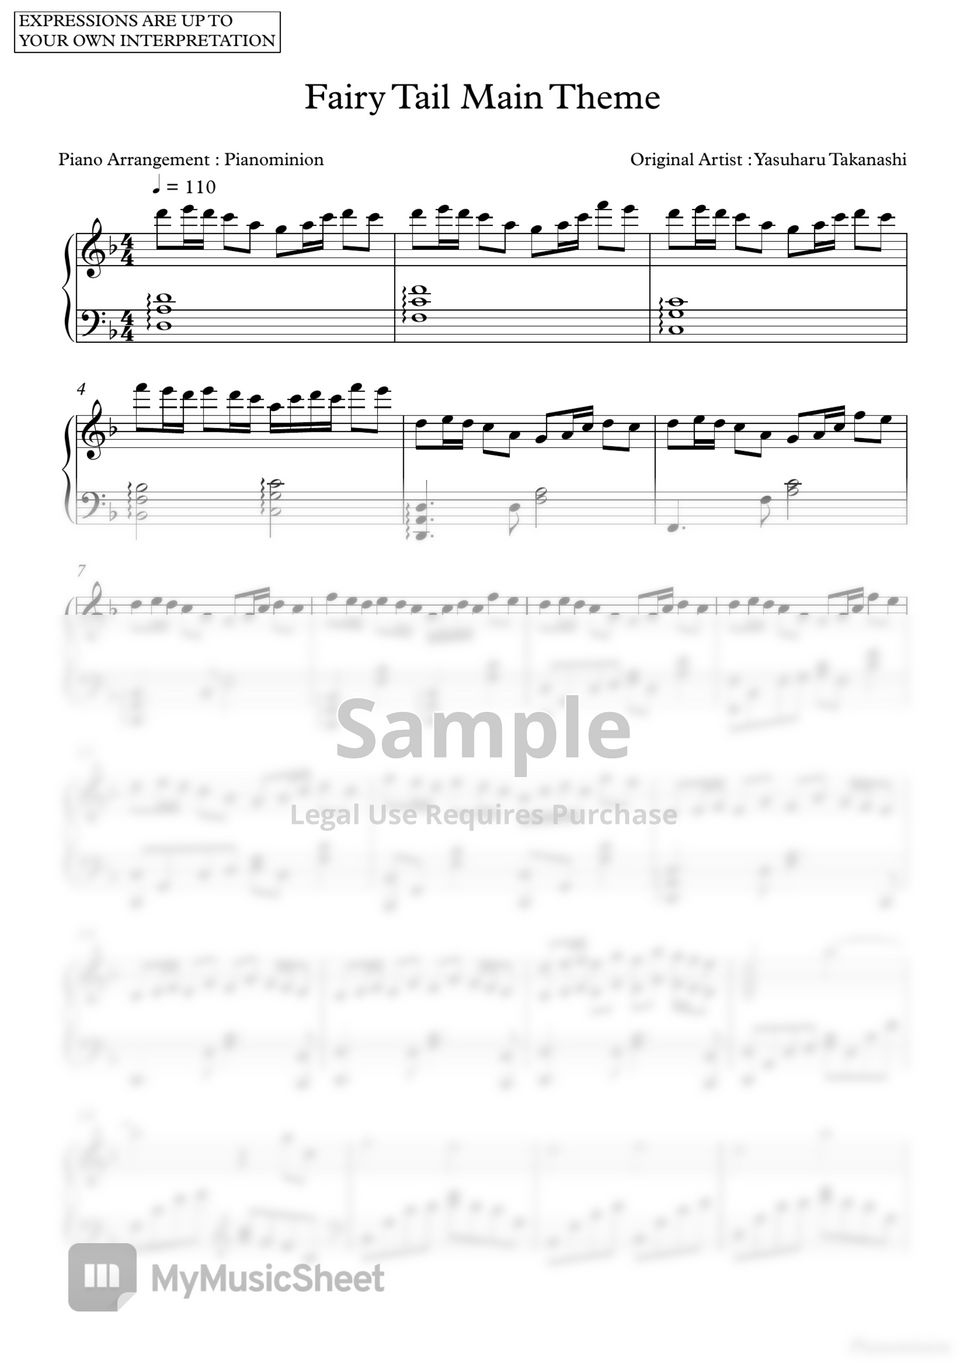 Yasuharu Takanashi - Fairy Tail Main Theme by Pianominion